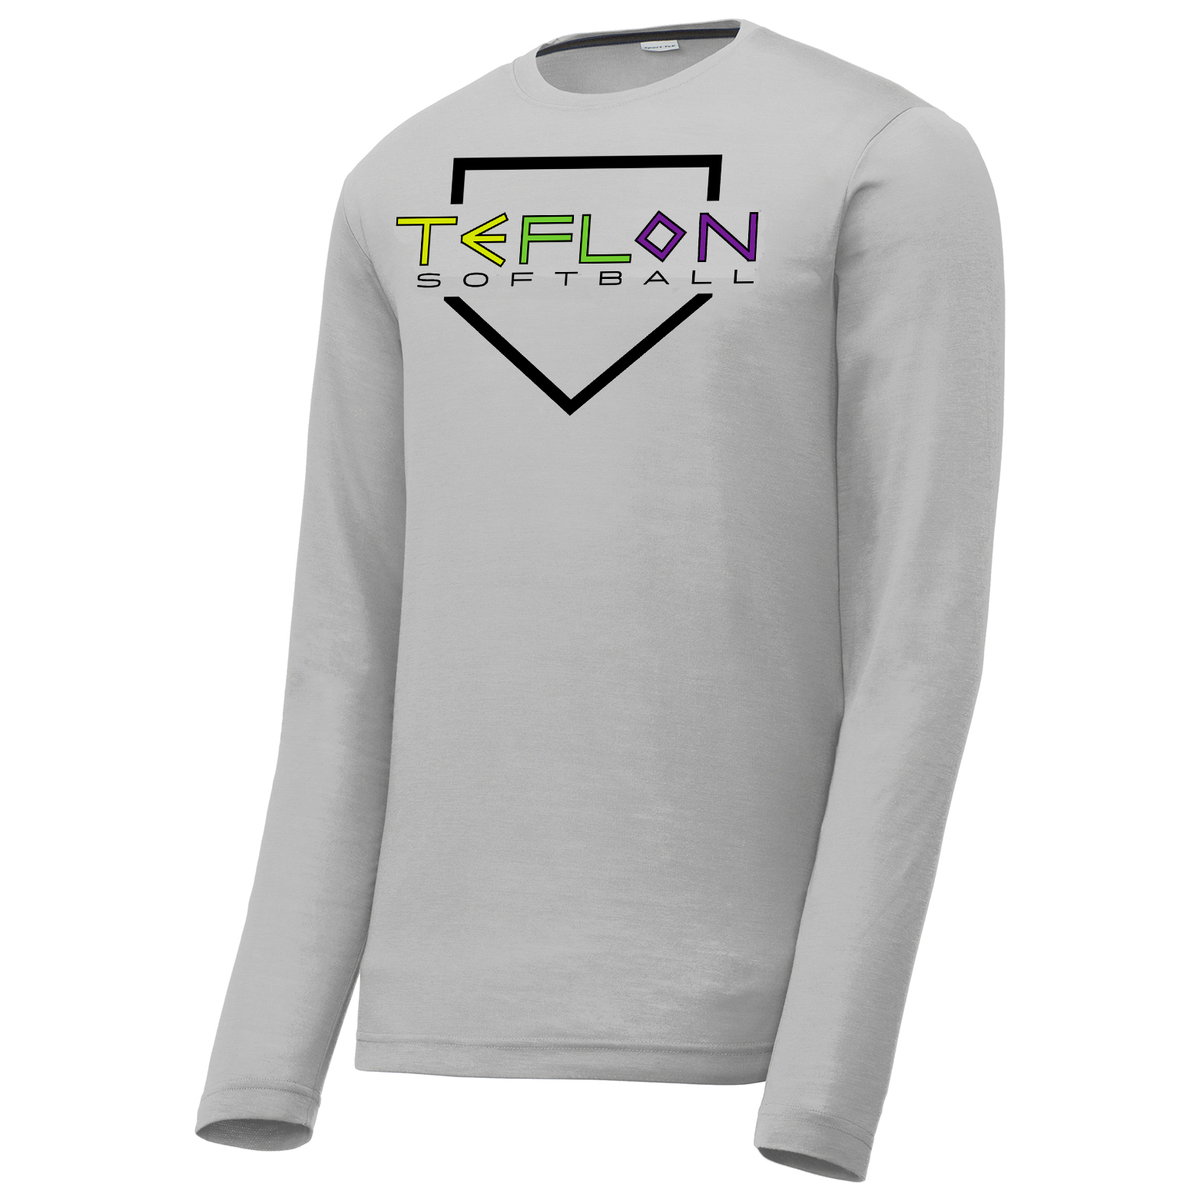 Team Teflon Softball Long Sleeve CottonTouch Performance Shirt